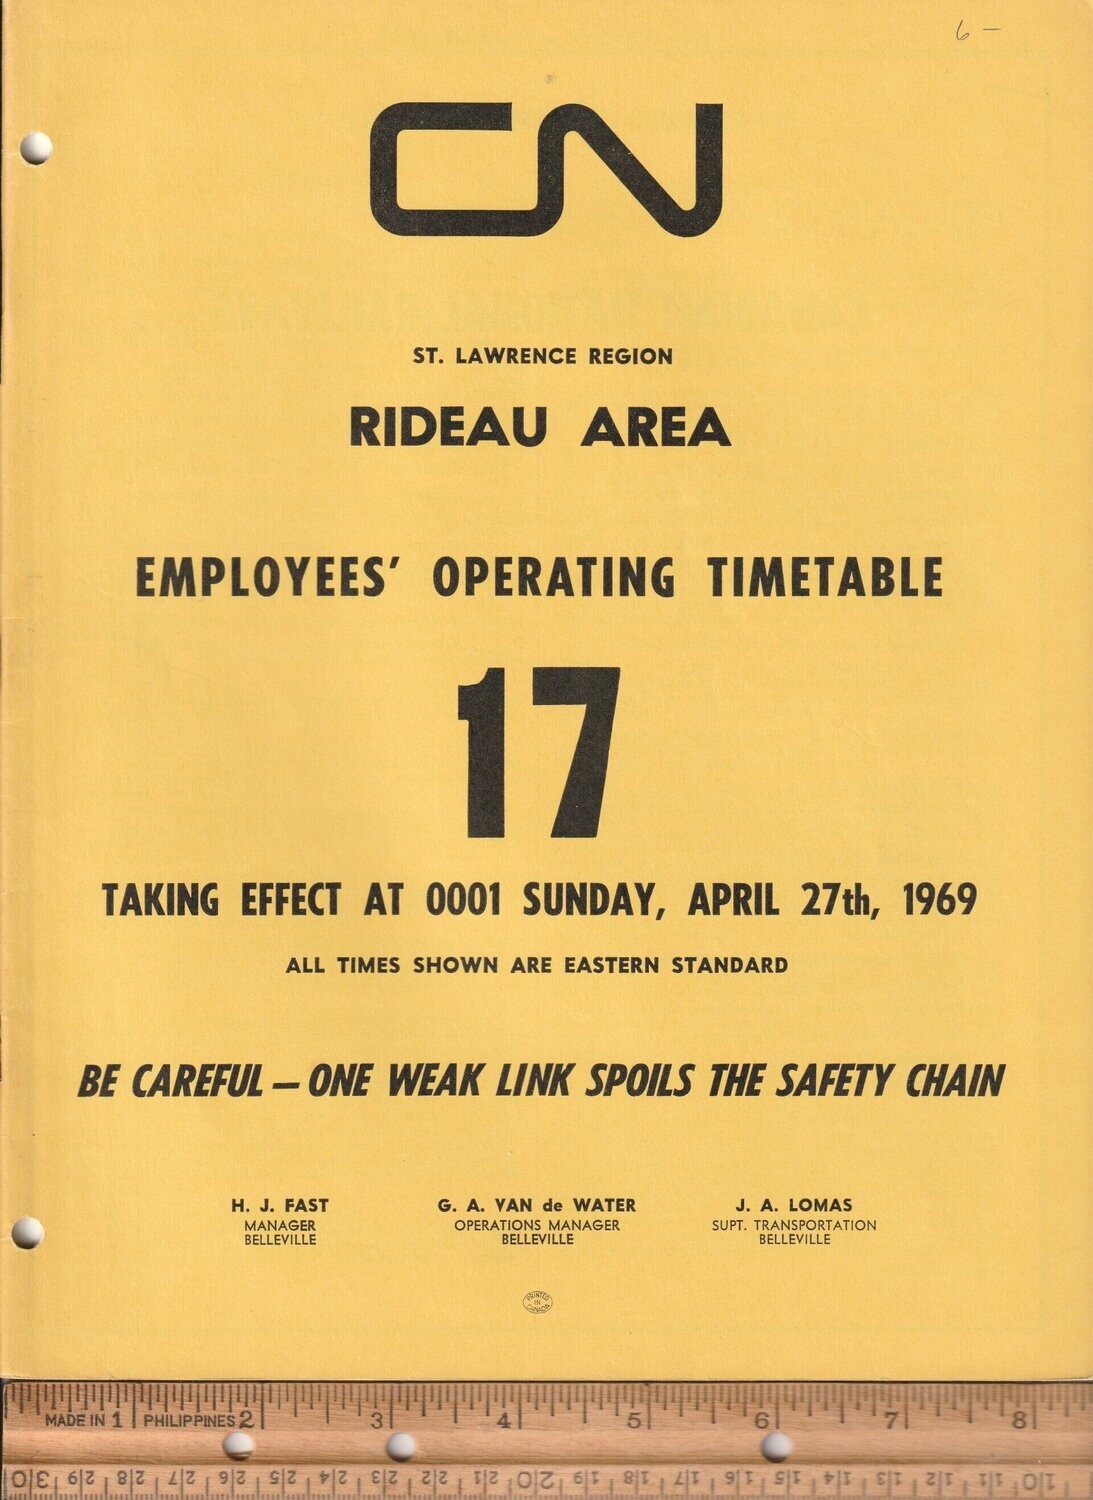 Canadian National Rideau Area 1969